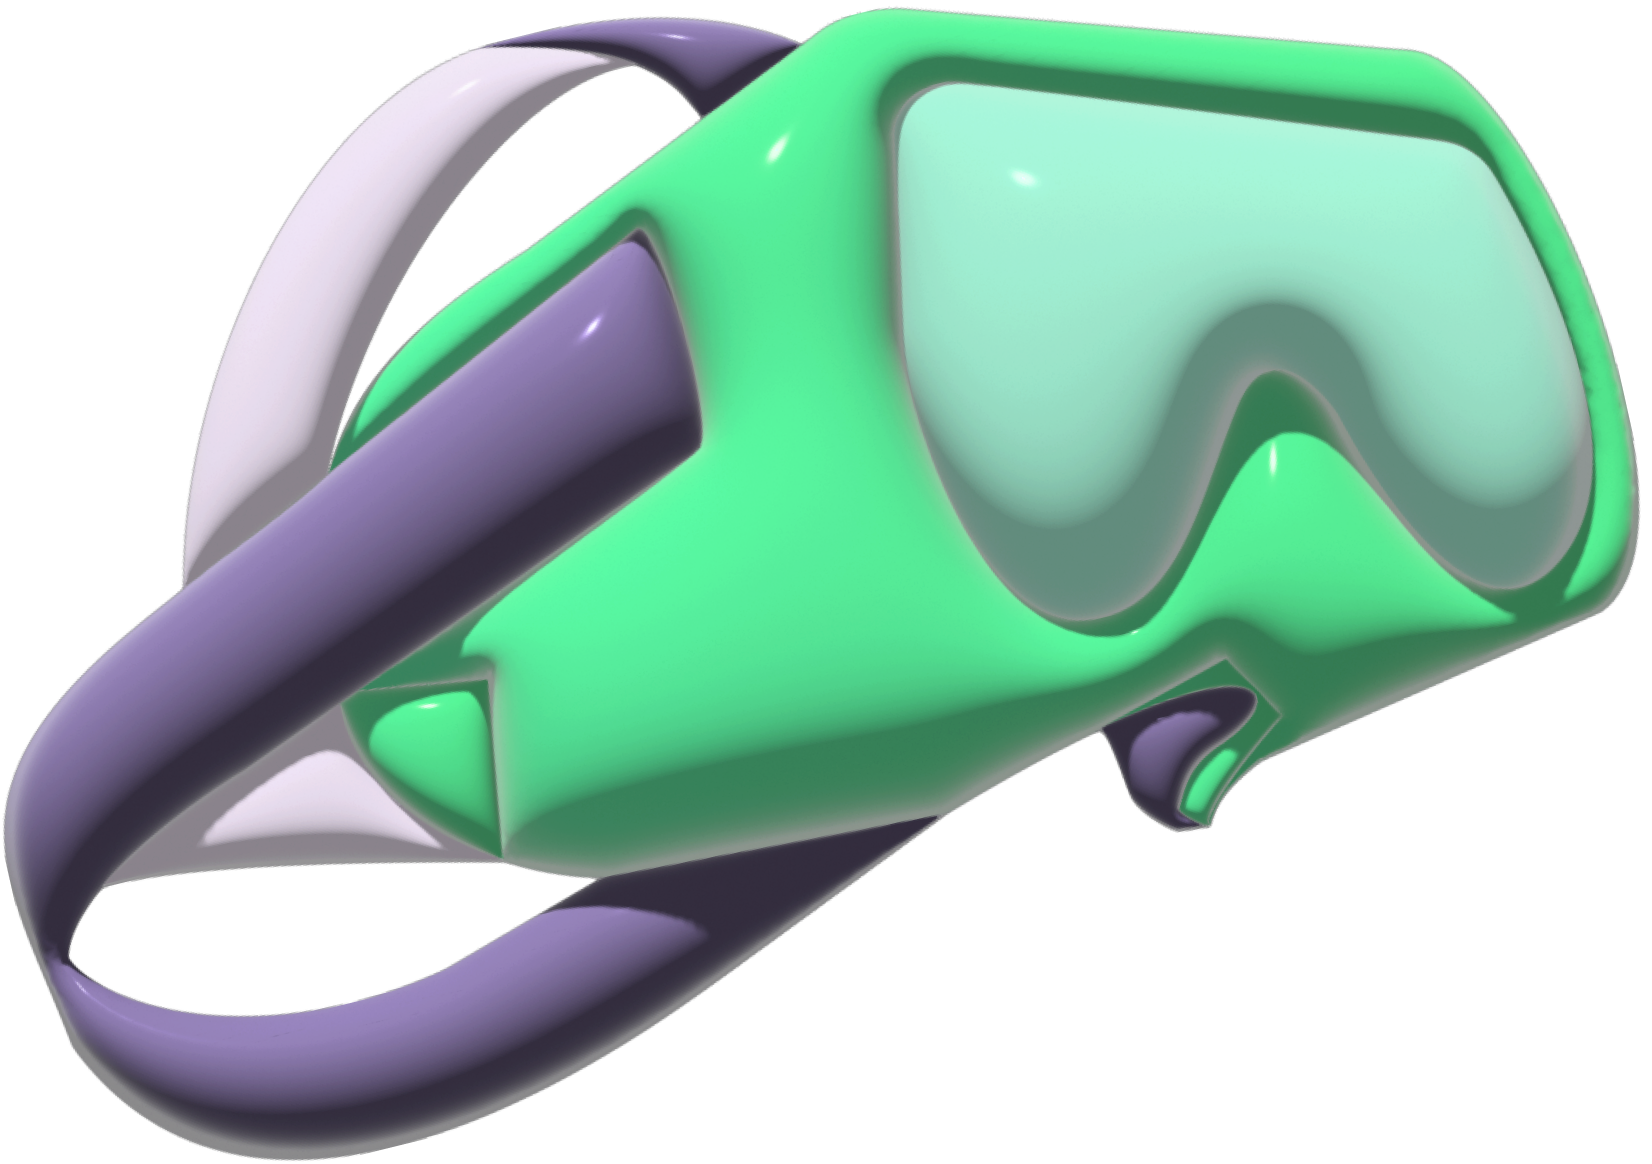 A 3D render of VR goggles